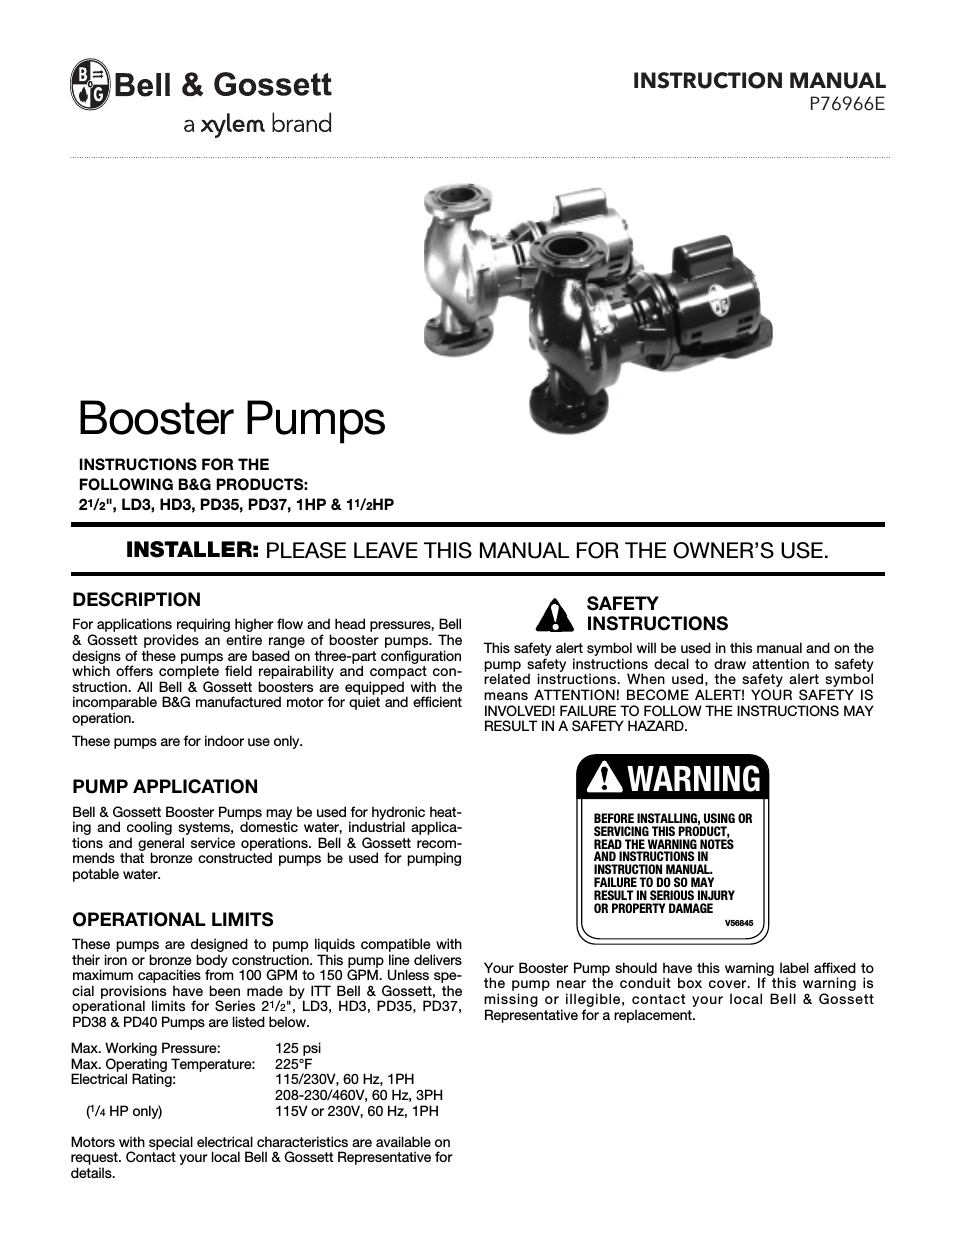 P76966E Booster Pumps 11/2HP